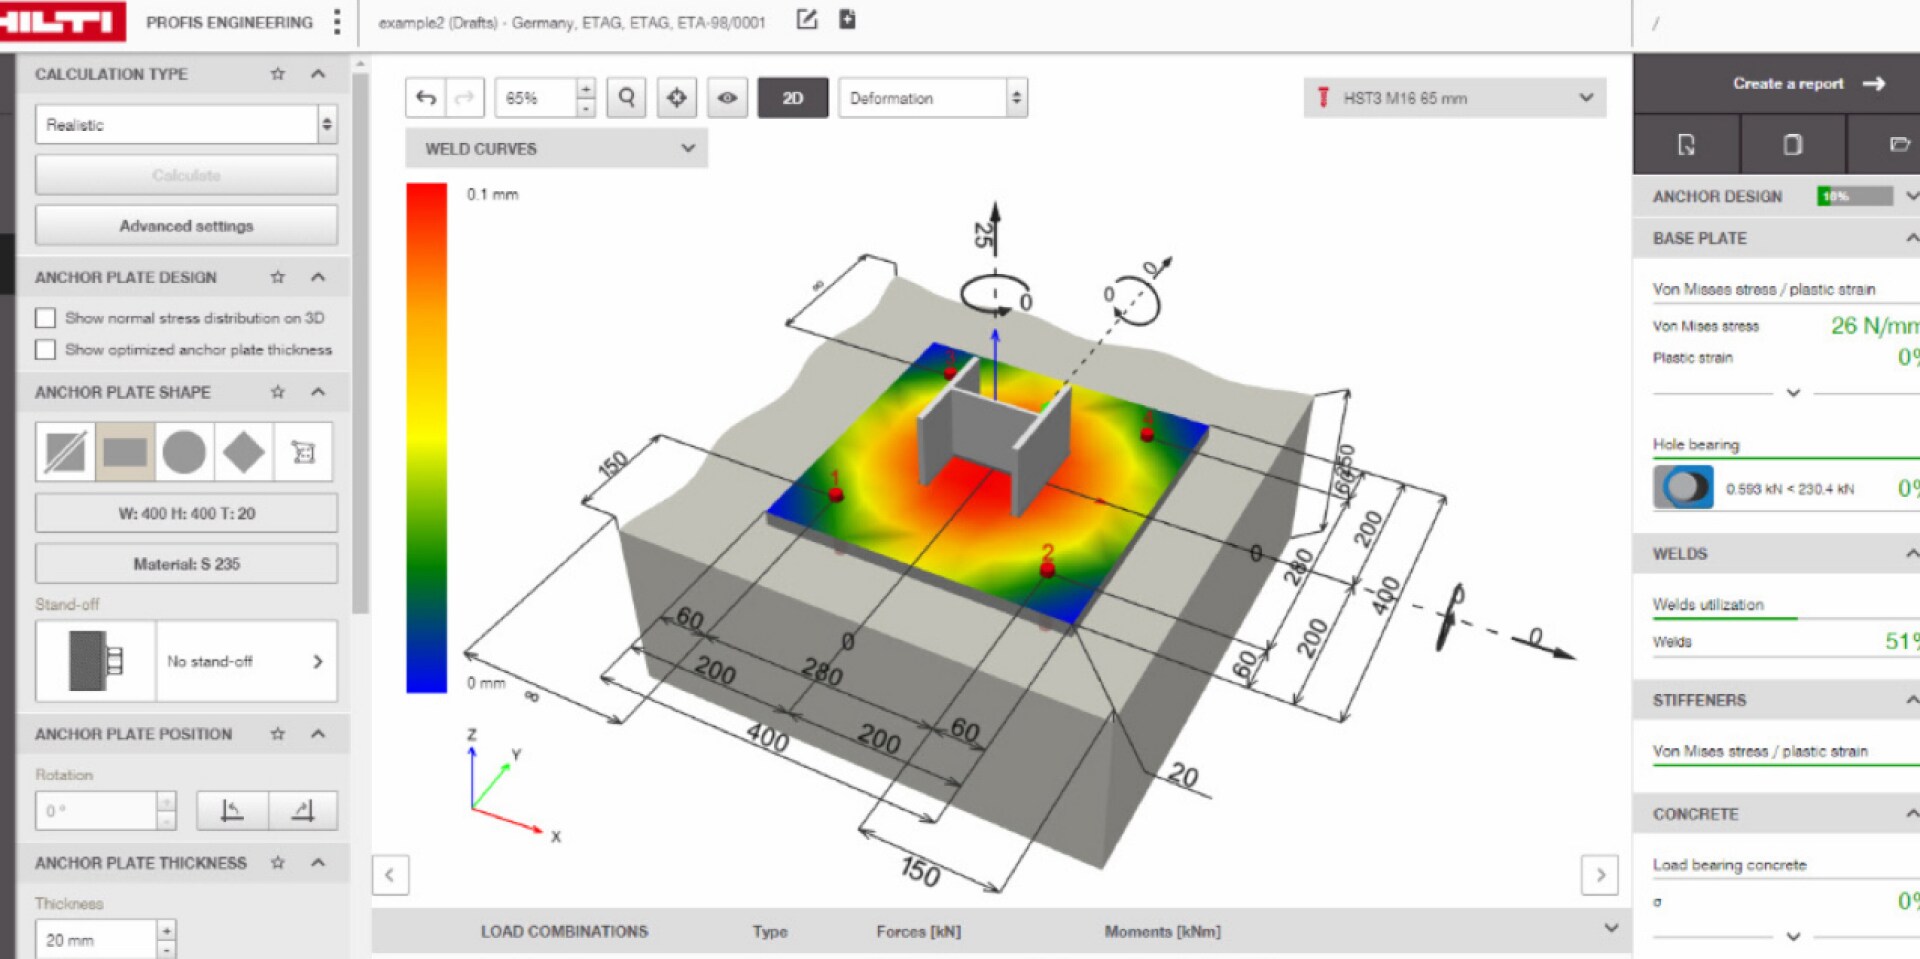 Screen shot of baseplate design in PROFIS Engineering software